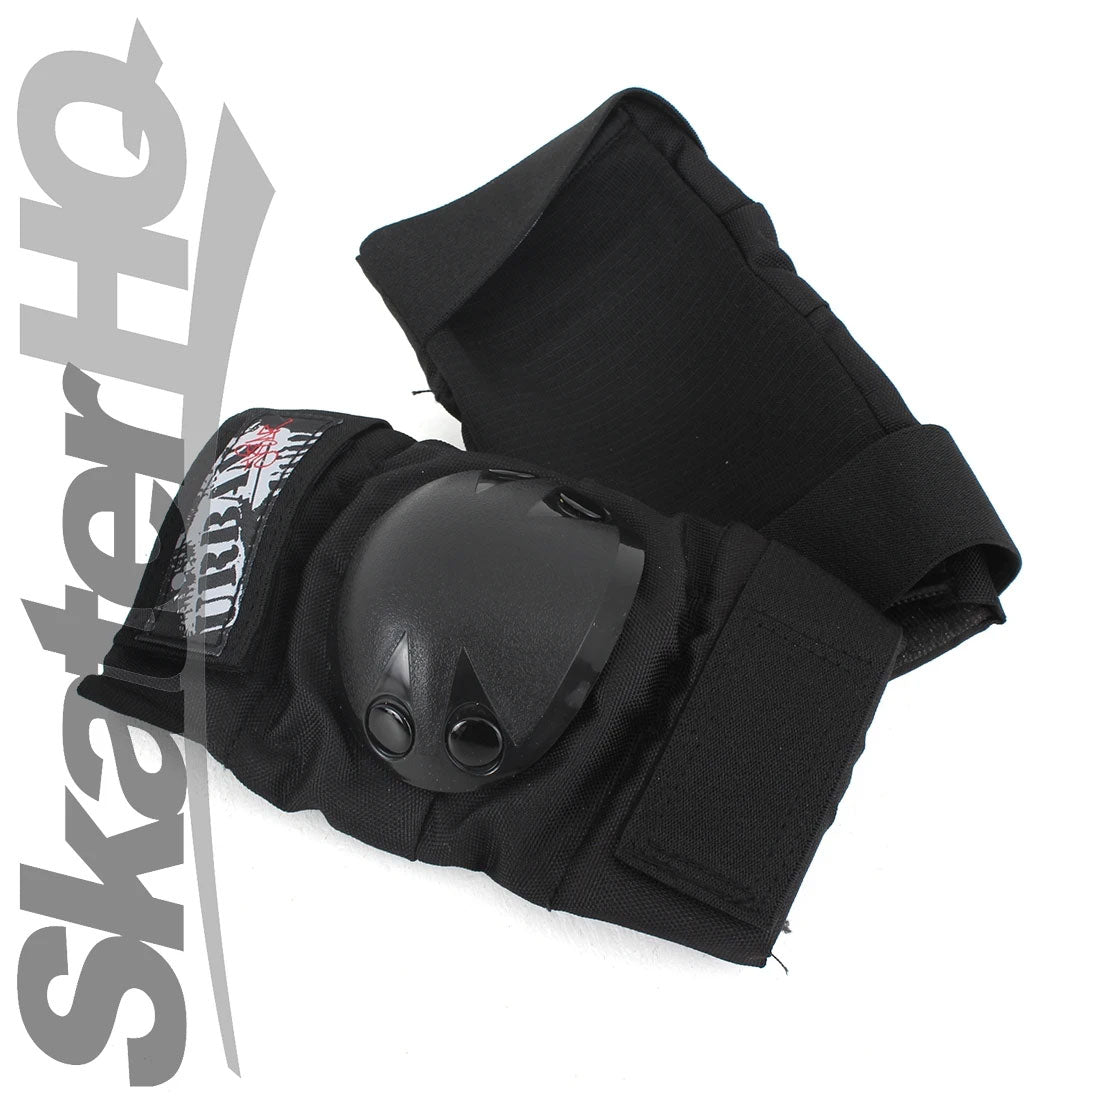 Urban Skater Knee/Elbow Black - Medium Protective Gear